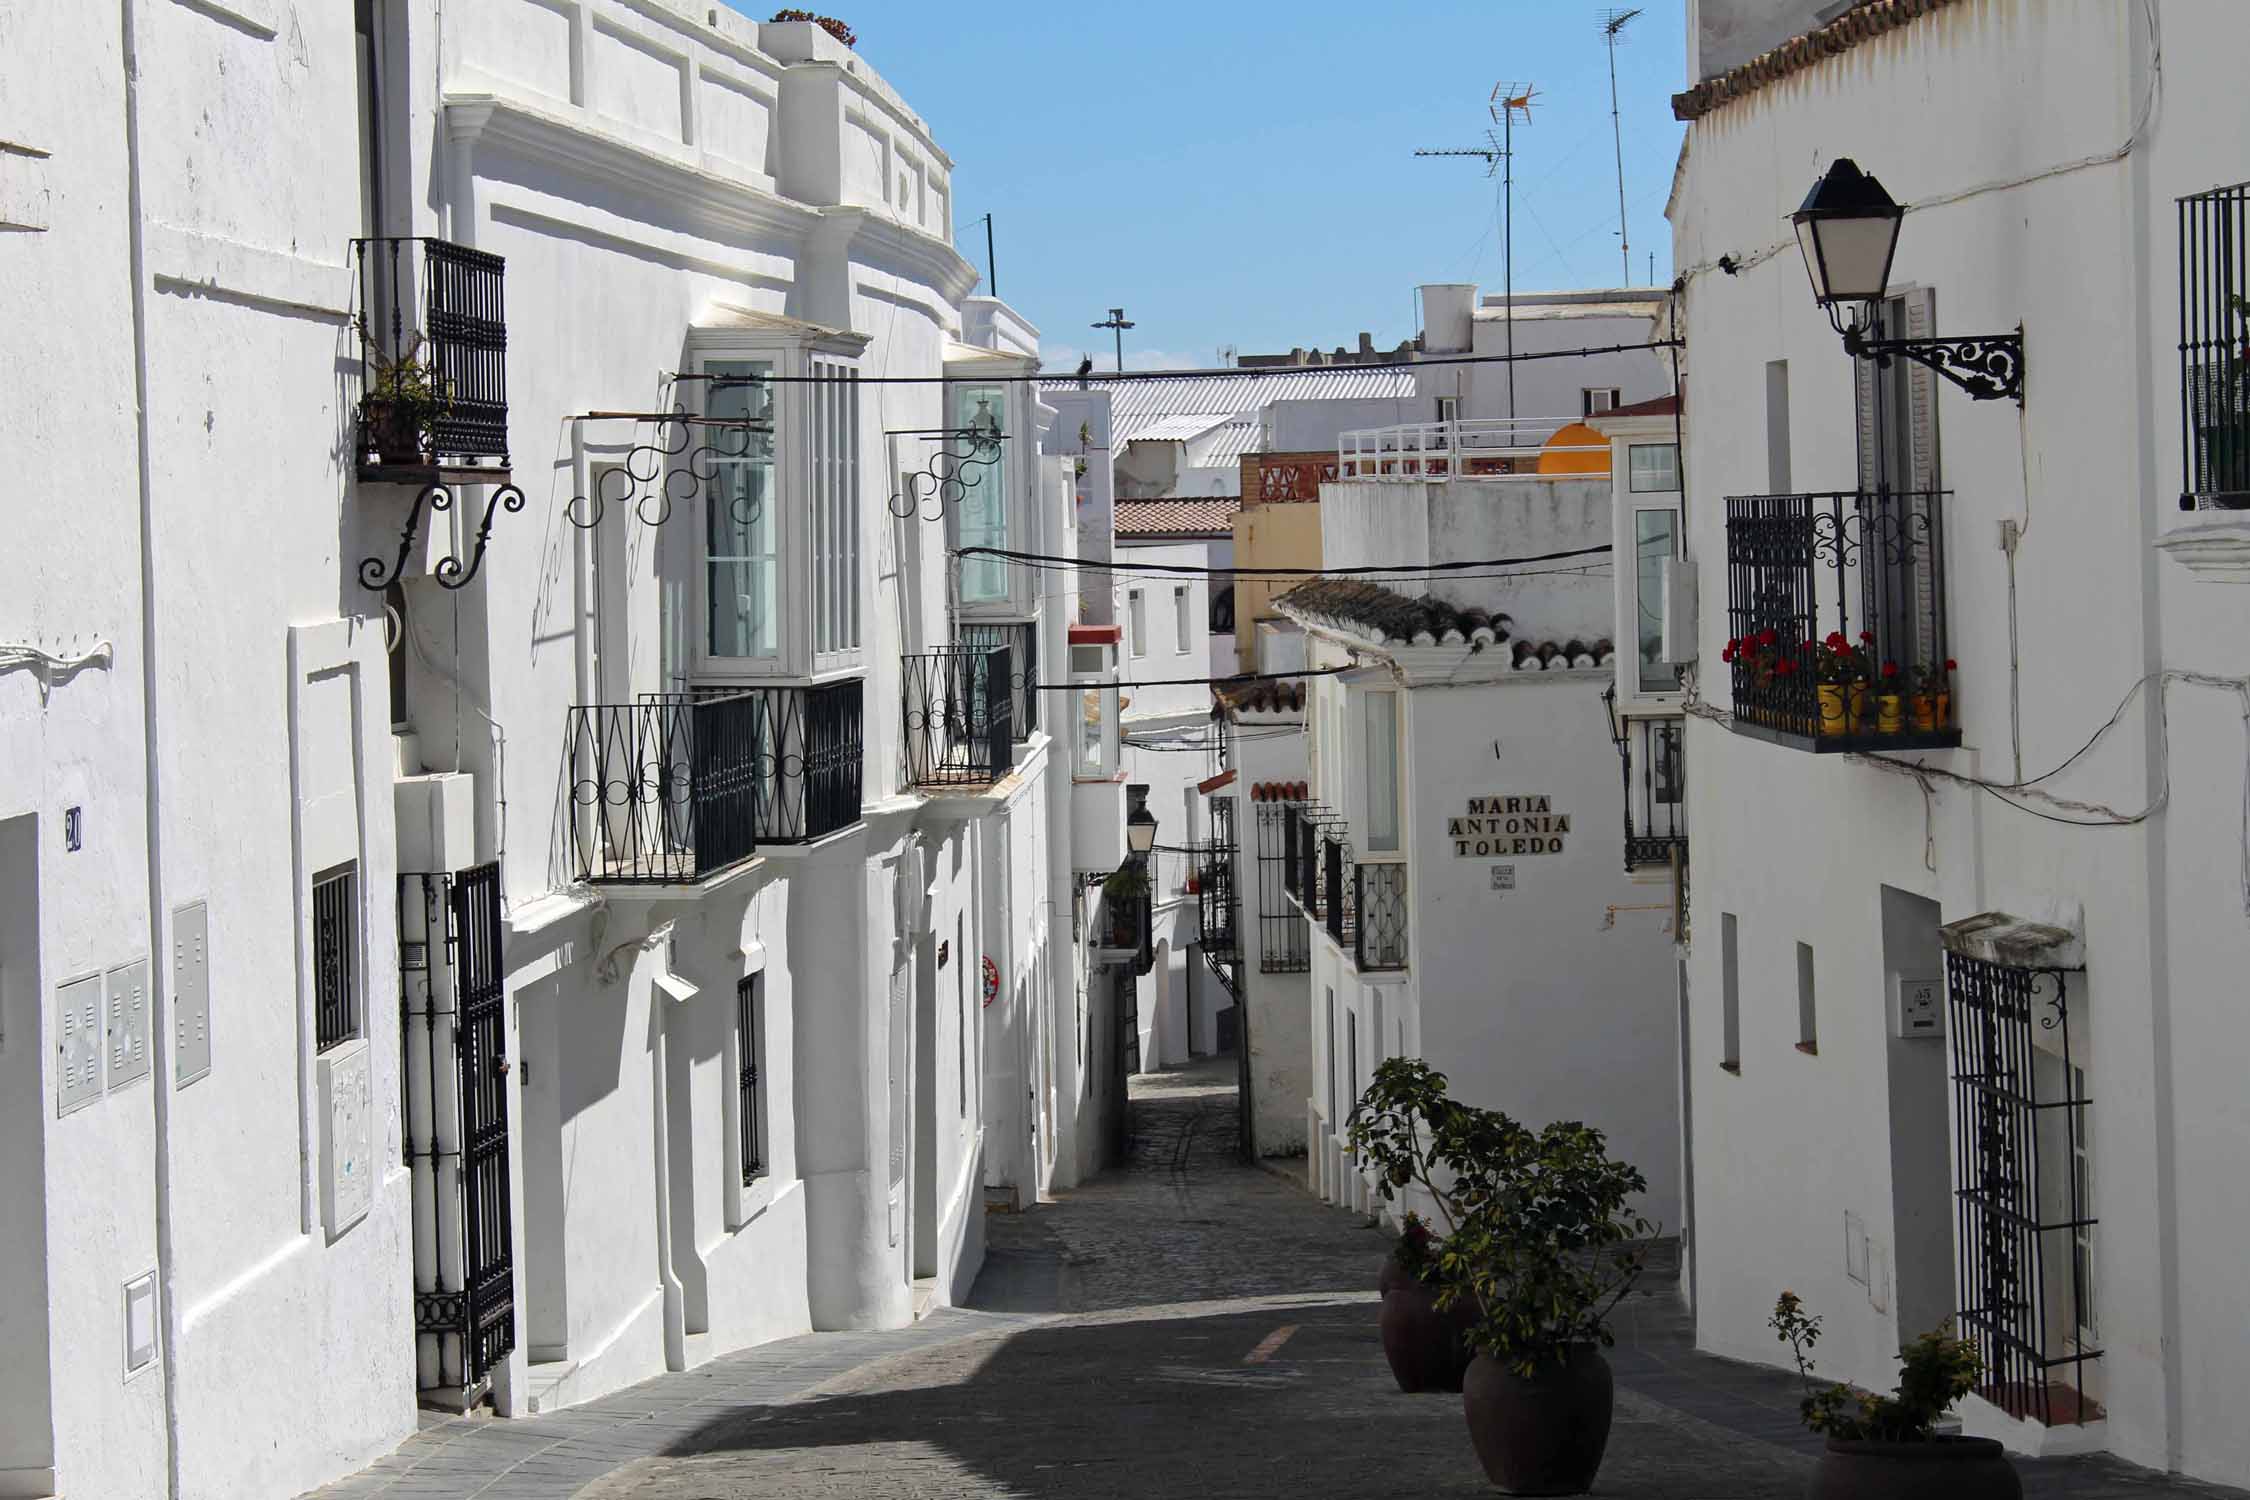 Tarifa, rue typique, maisons blanches